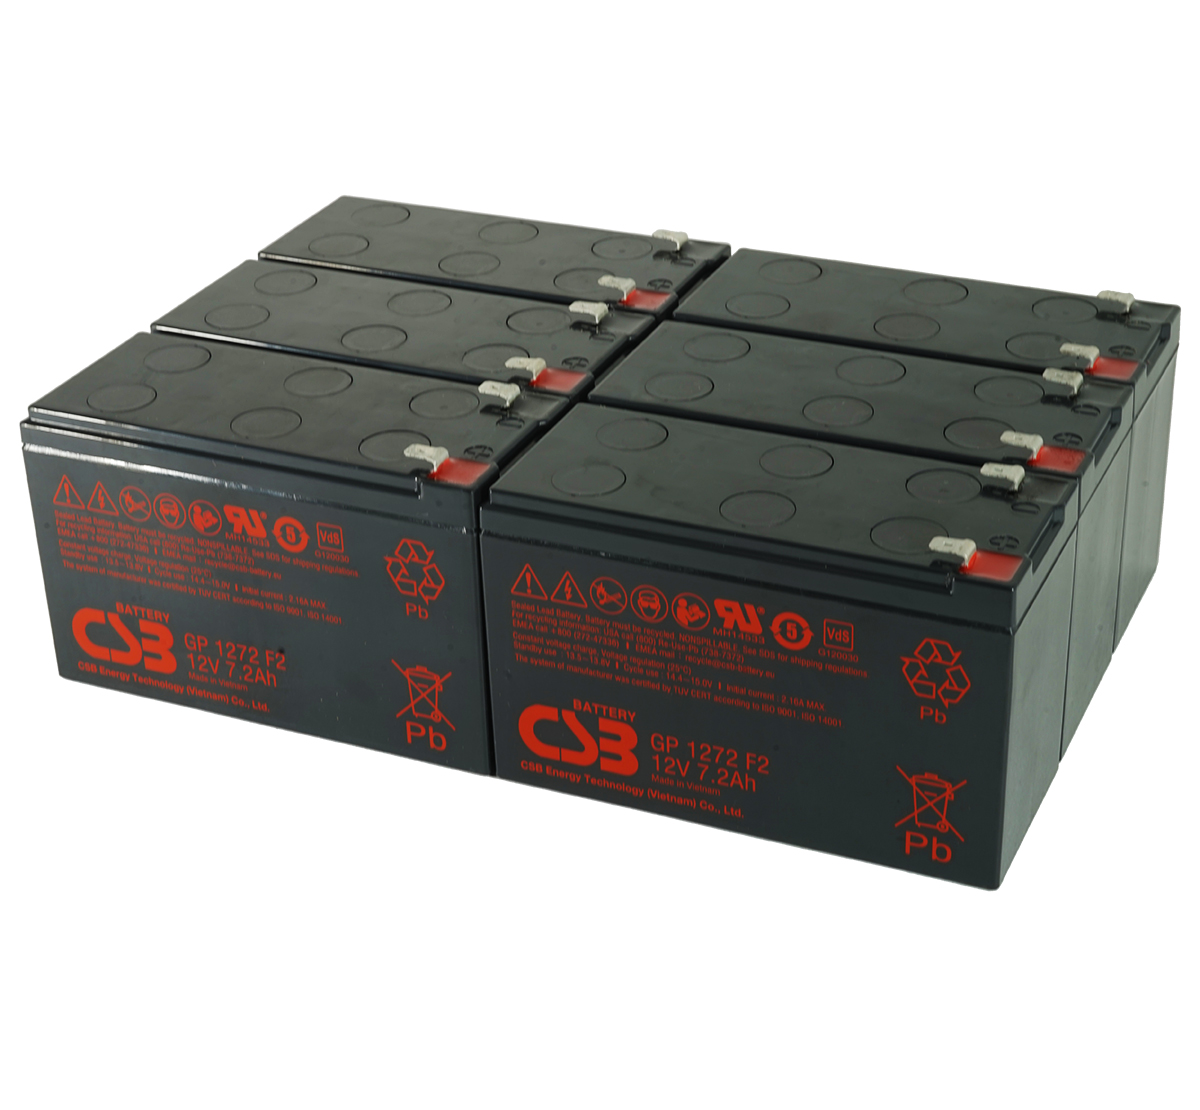 CSB GP1272 F2 VRLA Battery - Pack of 6 Batteries